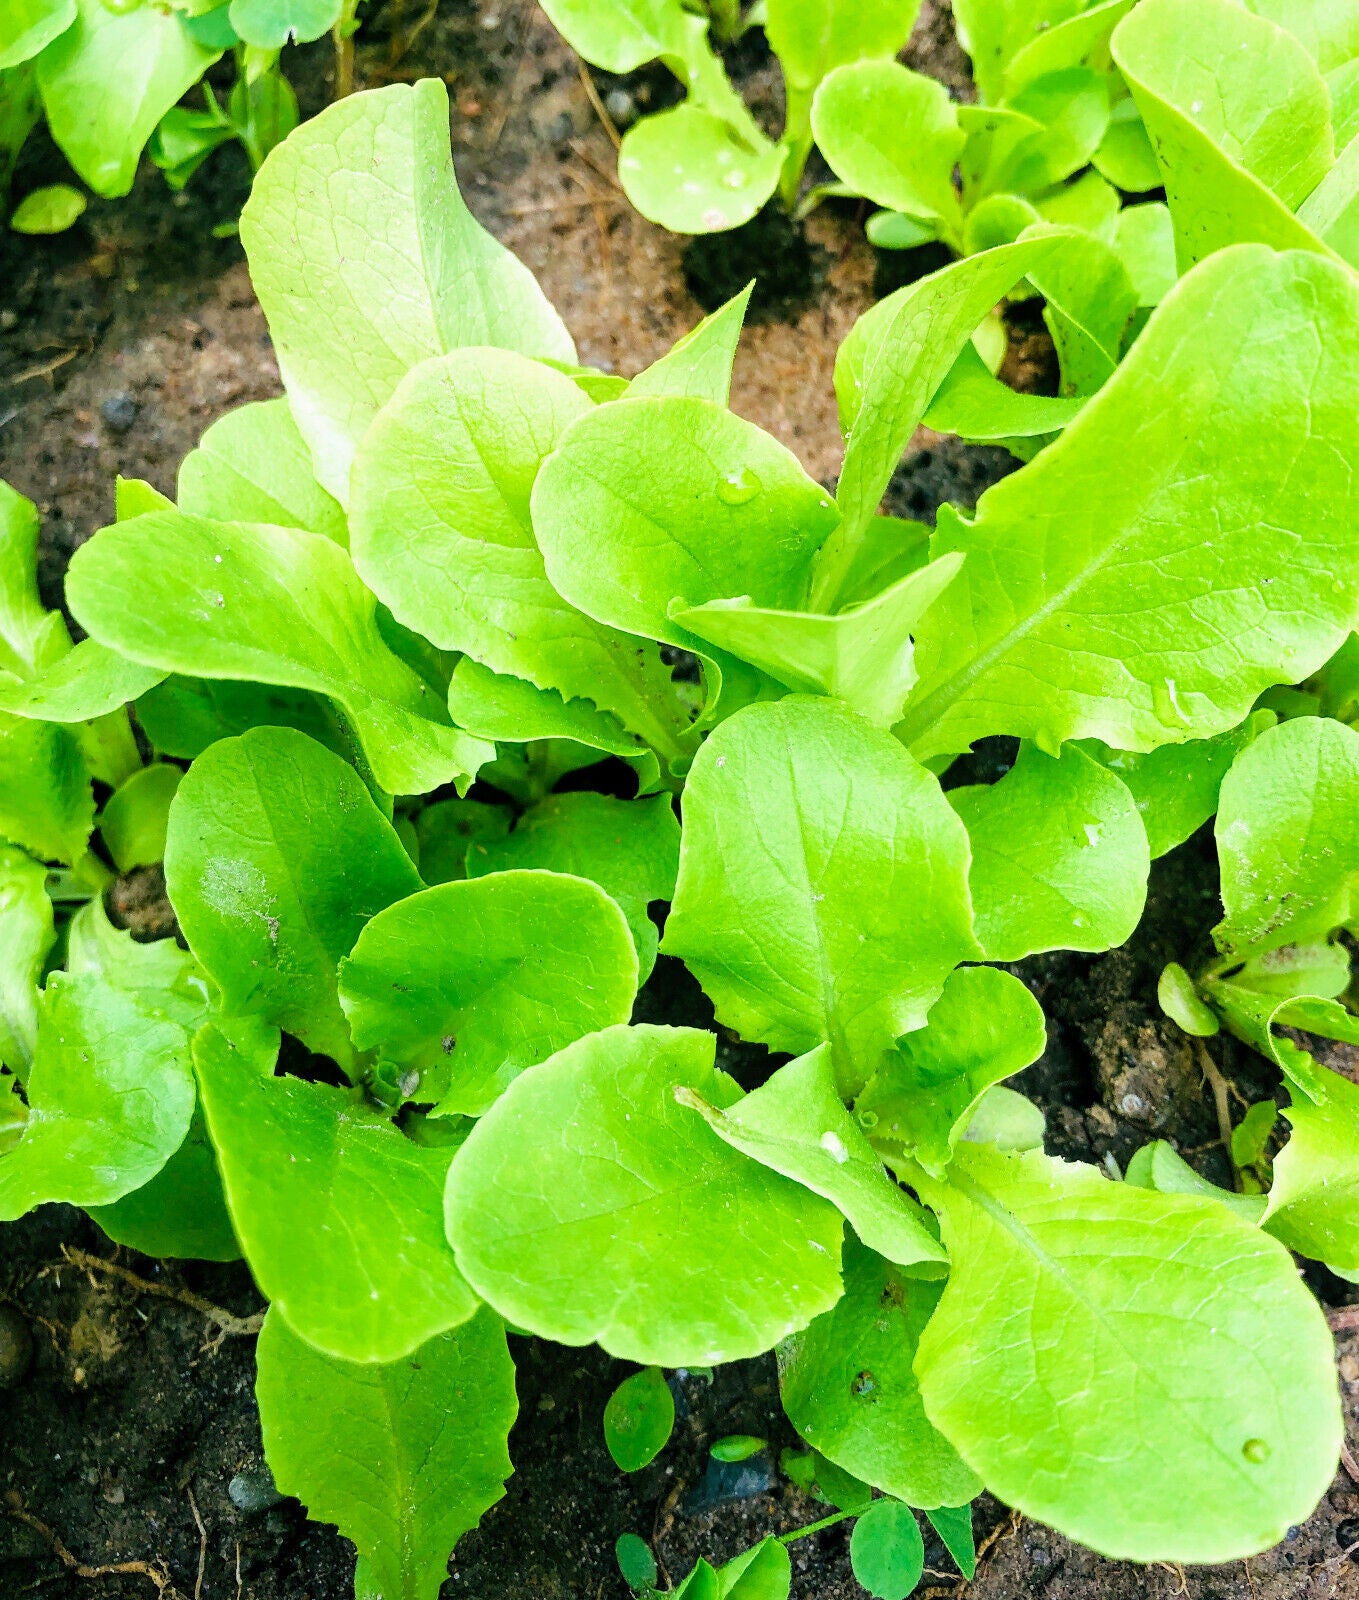 Hundredfold Buttercrunch Butterhead Lettuce 1000 Vegetable Seeds – Butter Head Bibb Type, Non-GMO, Containers/Microgreens